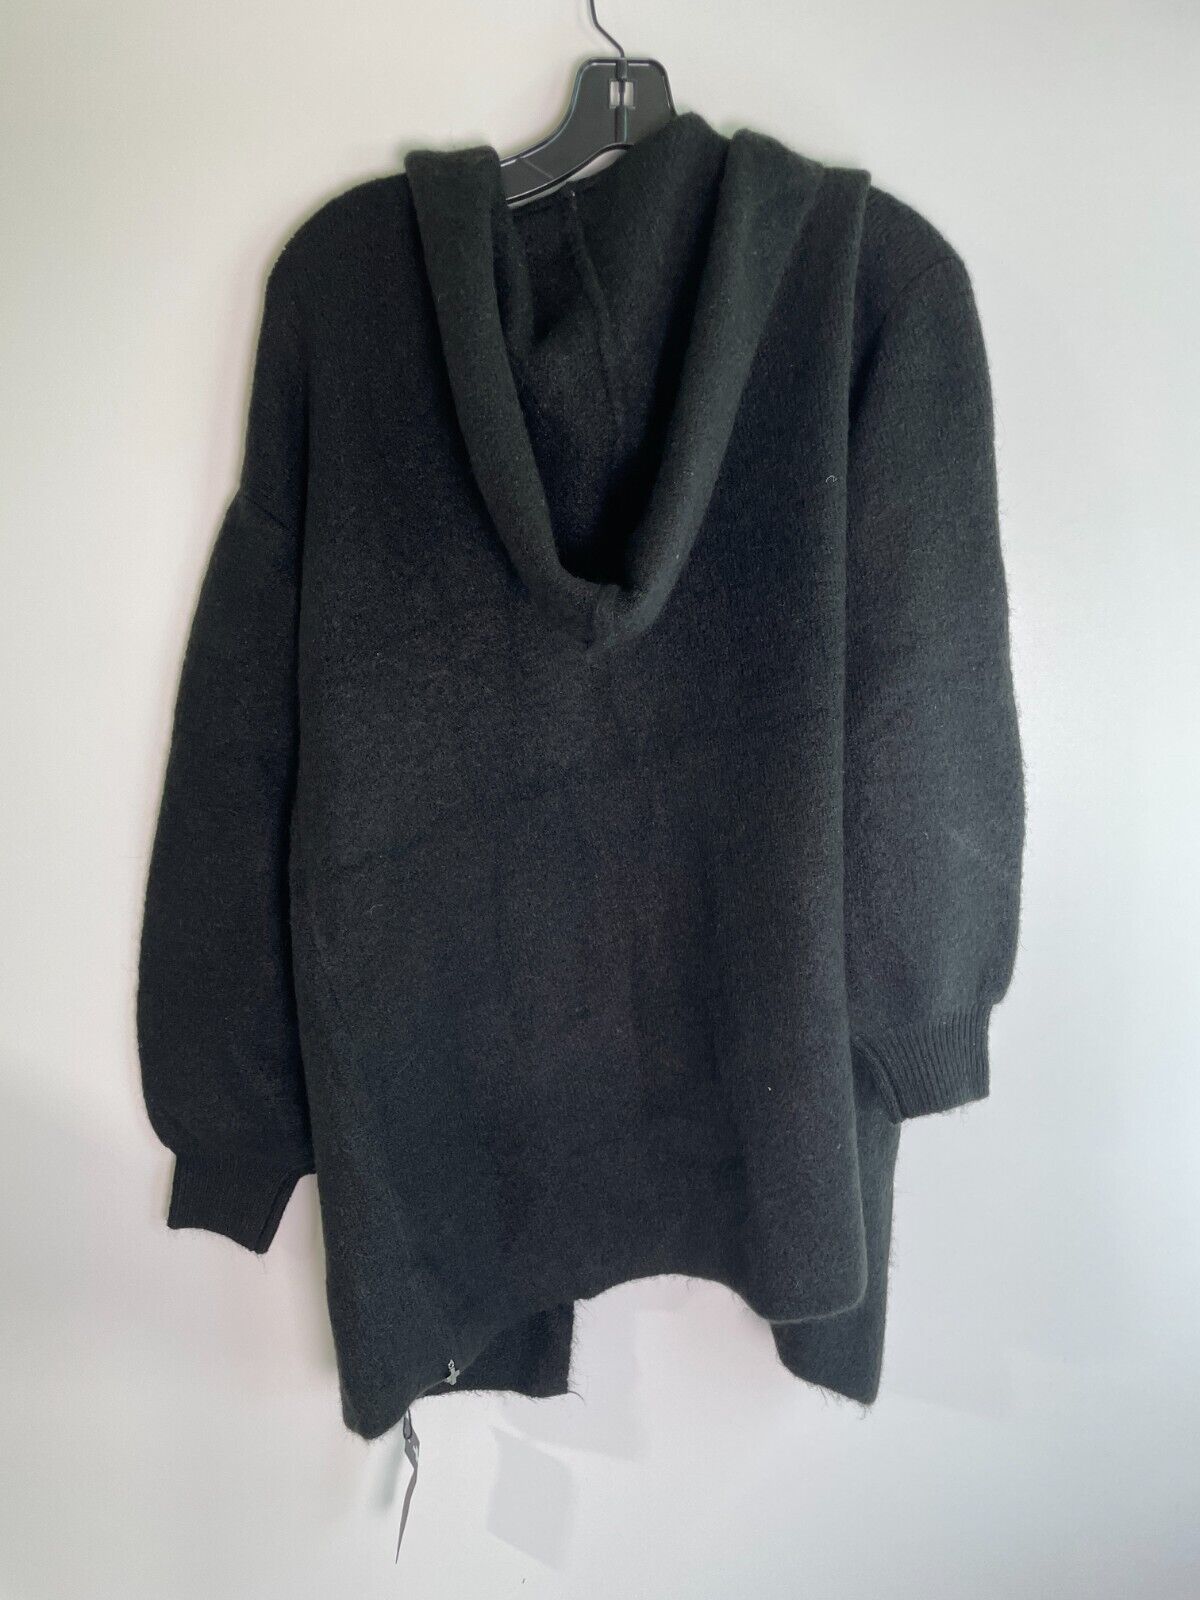 Beryll Women's One Size Cashmere Hooded Cardigan Sweater Black Oversized Pockets